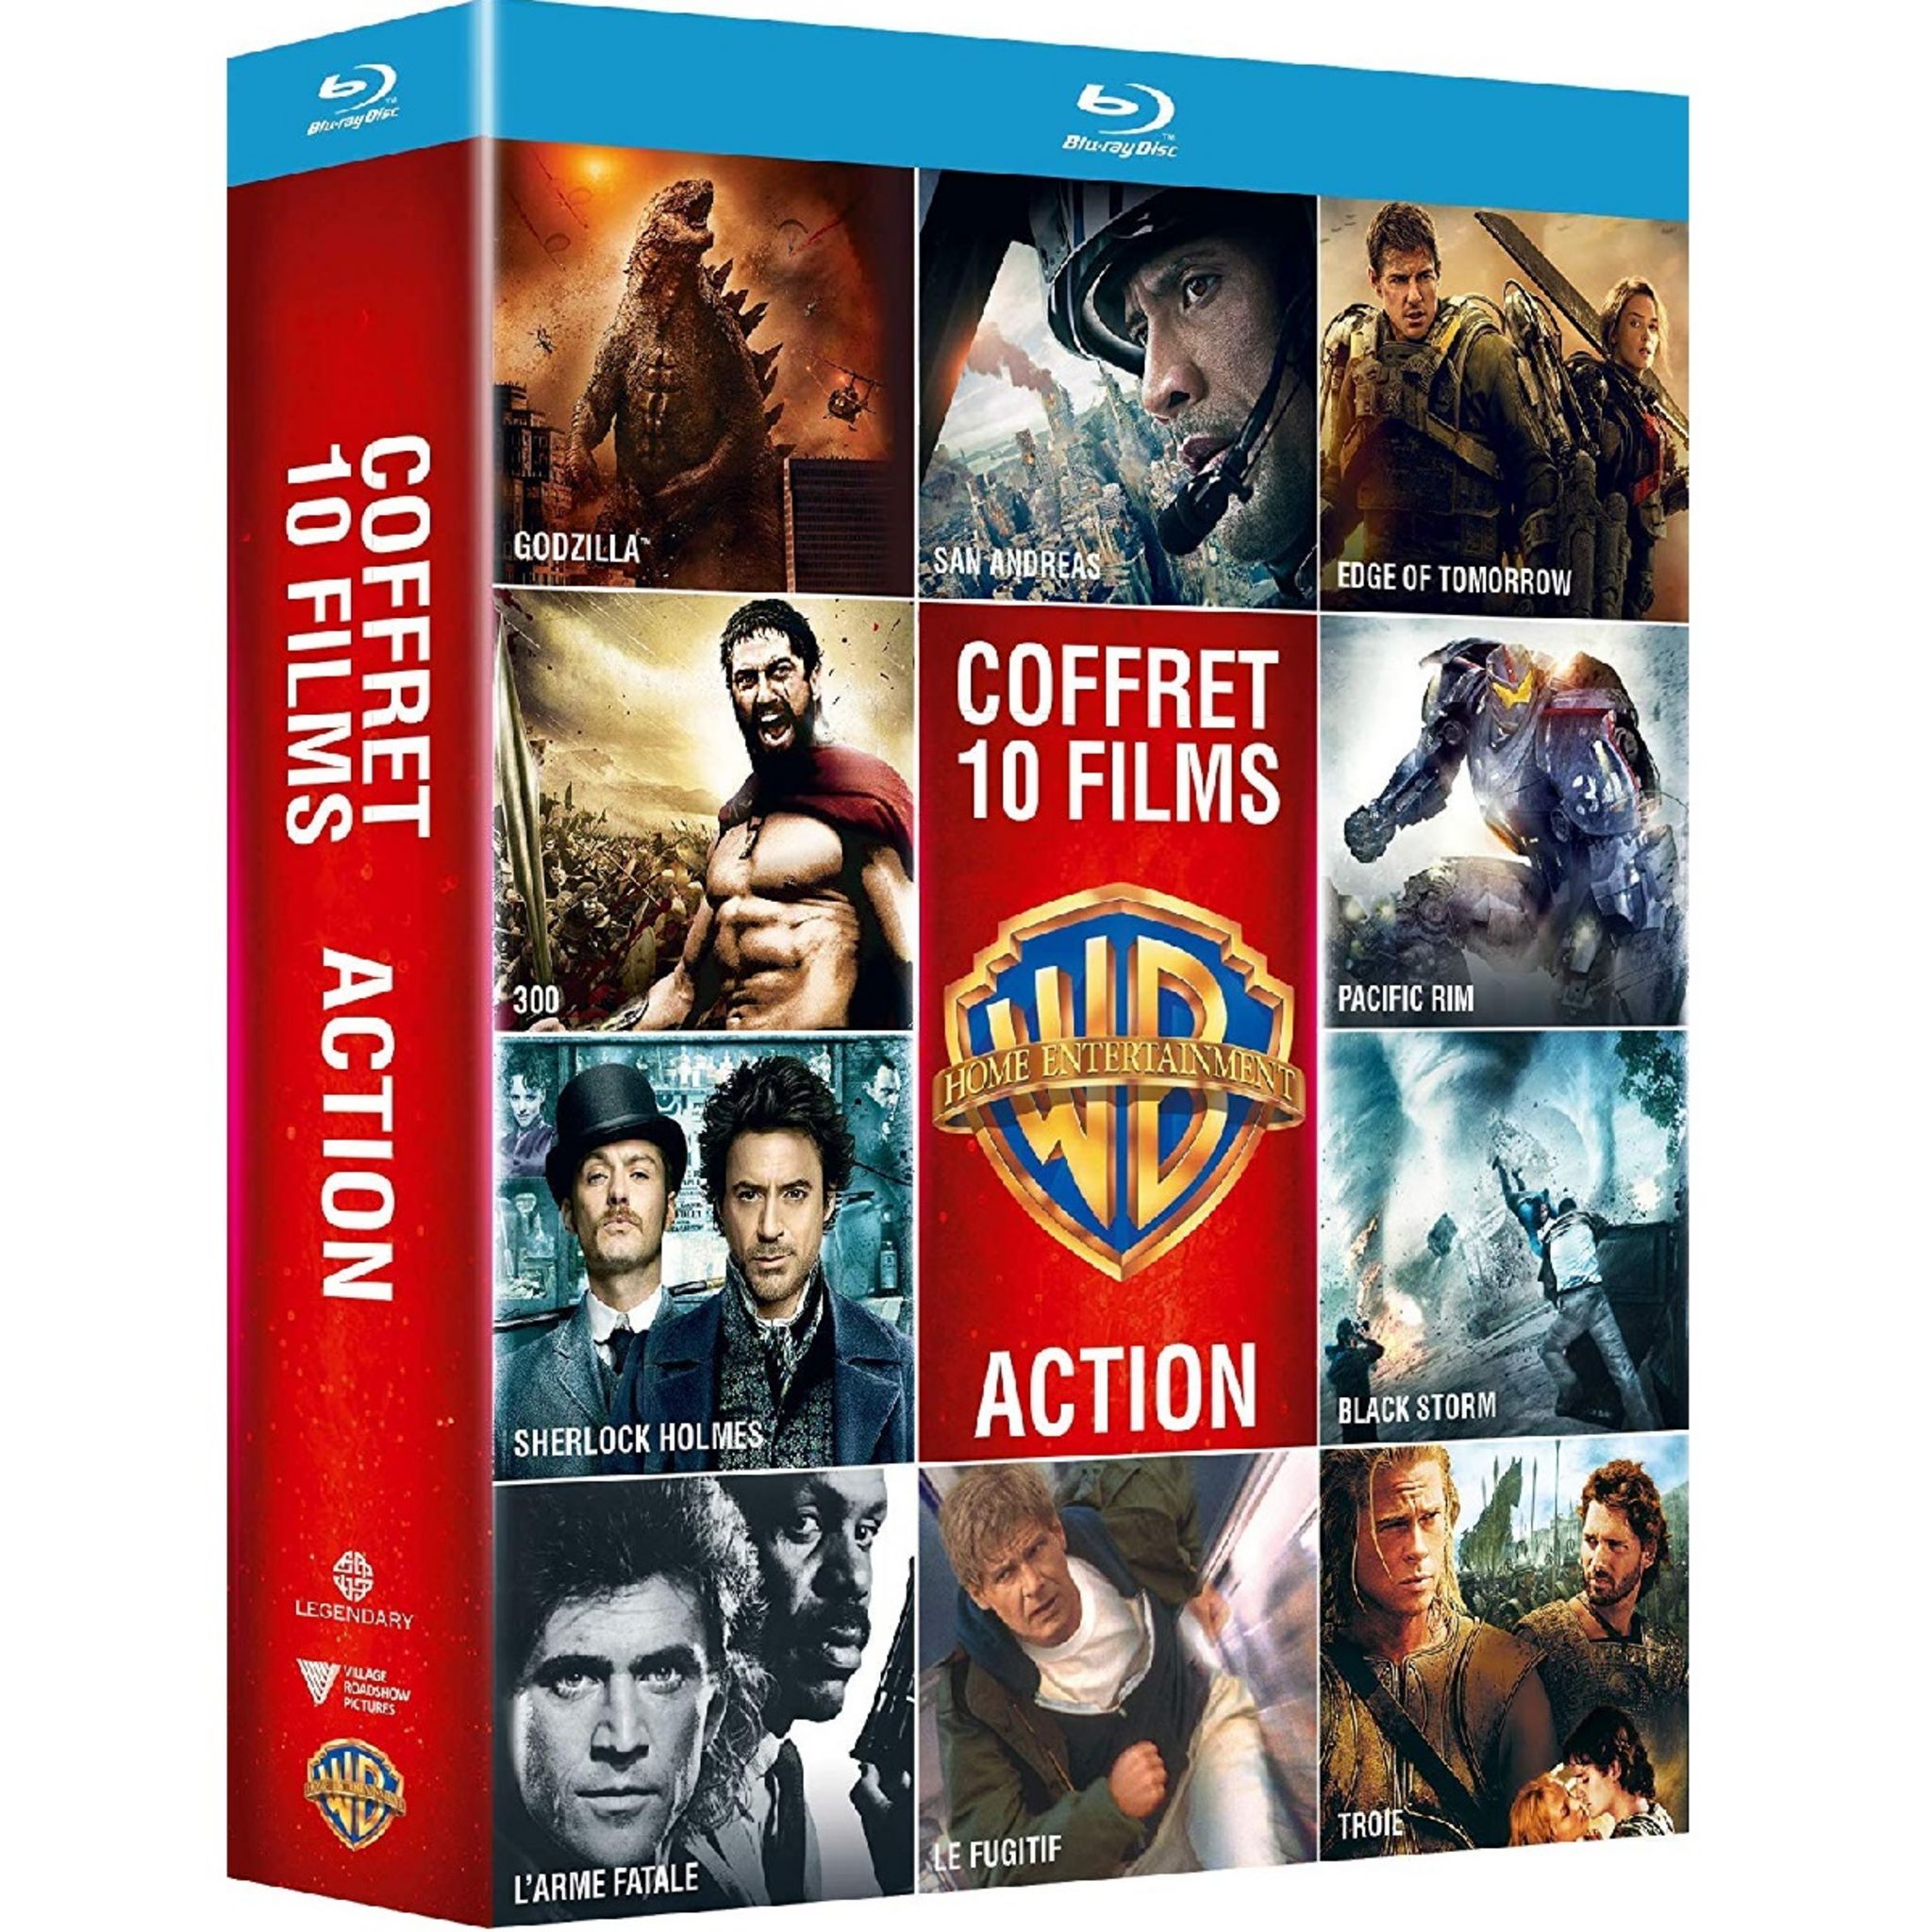 Blu-Ray Coffret 5 DVD + 2 CD Karaoké Exclu Auchan : Spécial